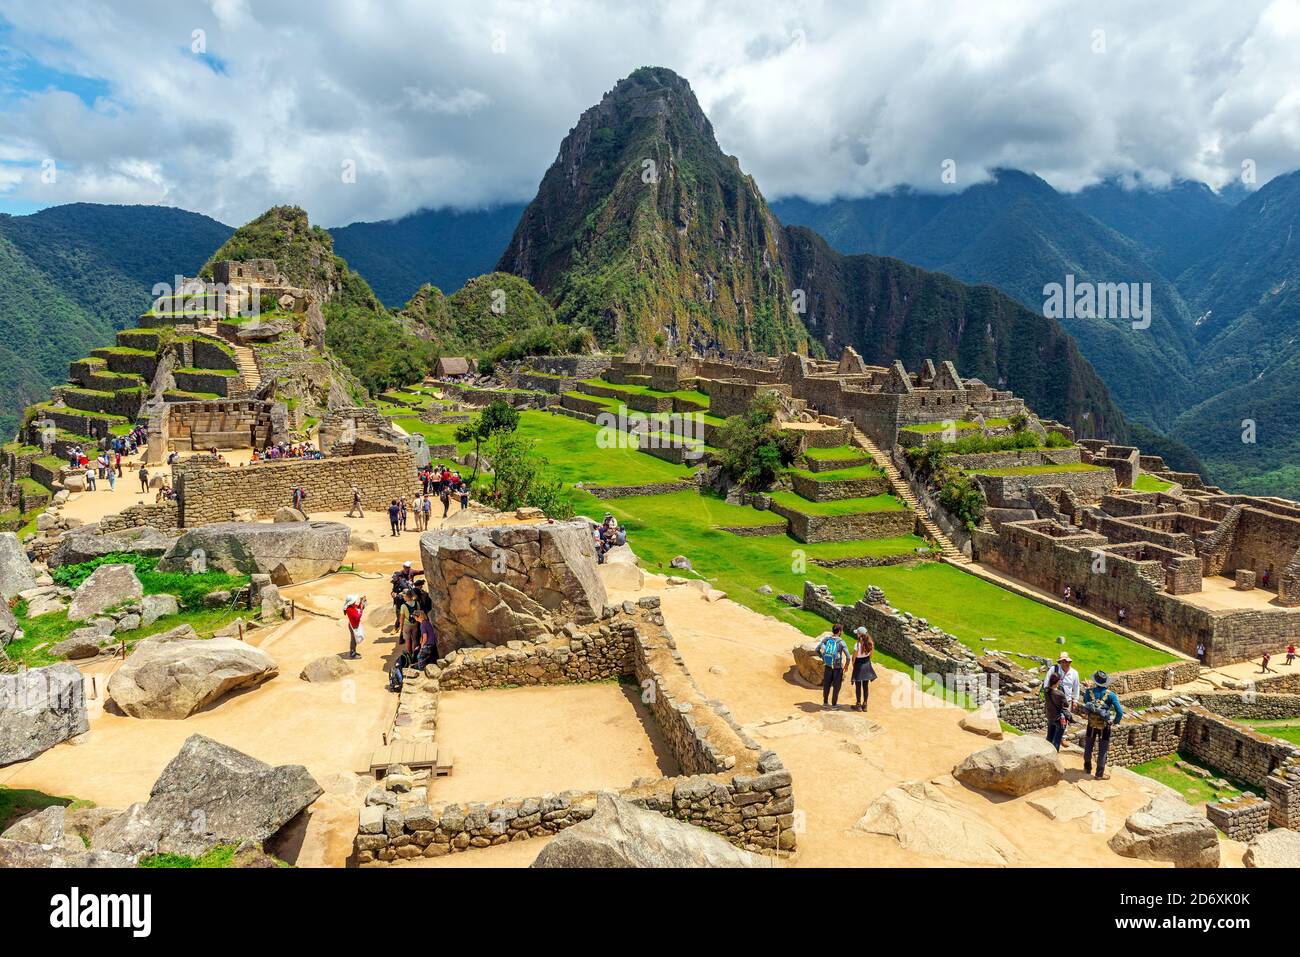 Tourists visiting the lost city and citadel of Machu Picchu, Cusco, Peru. Stock Photo